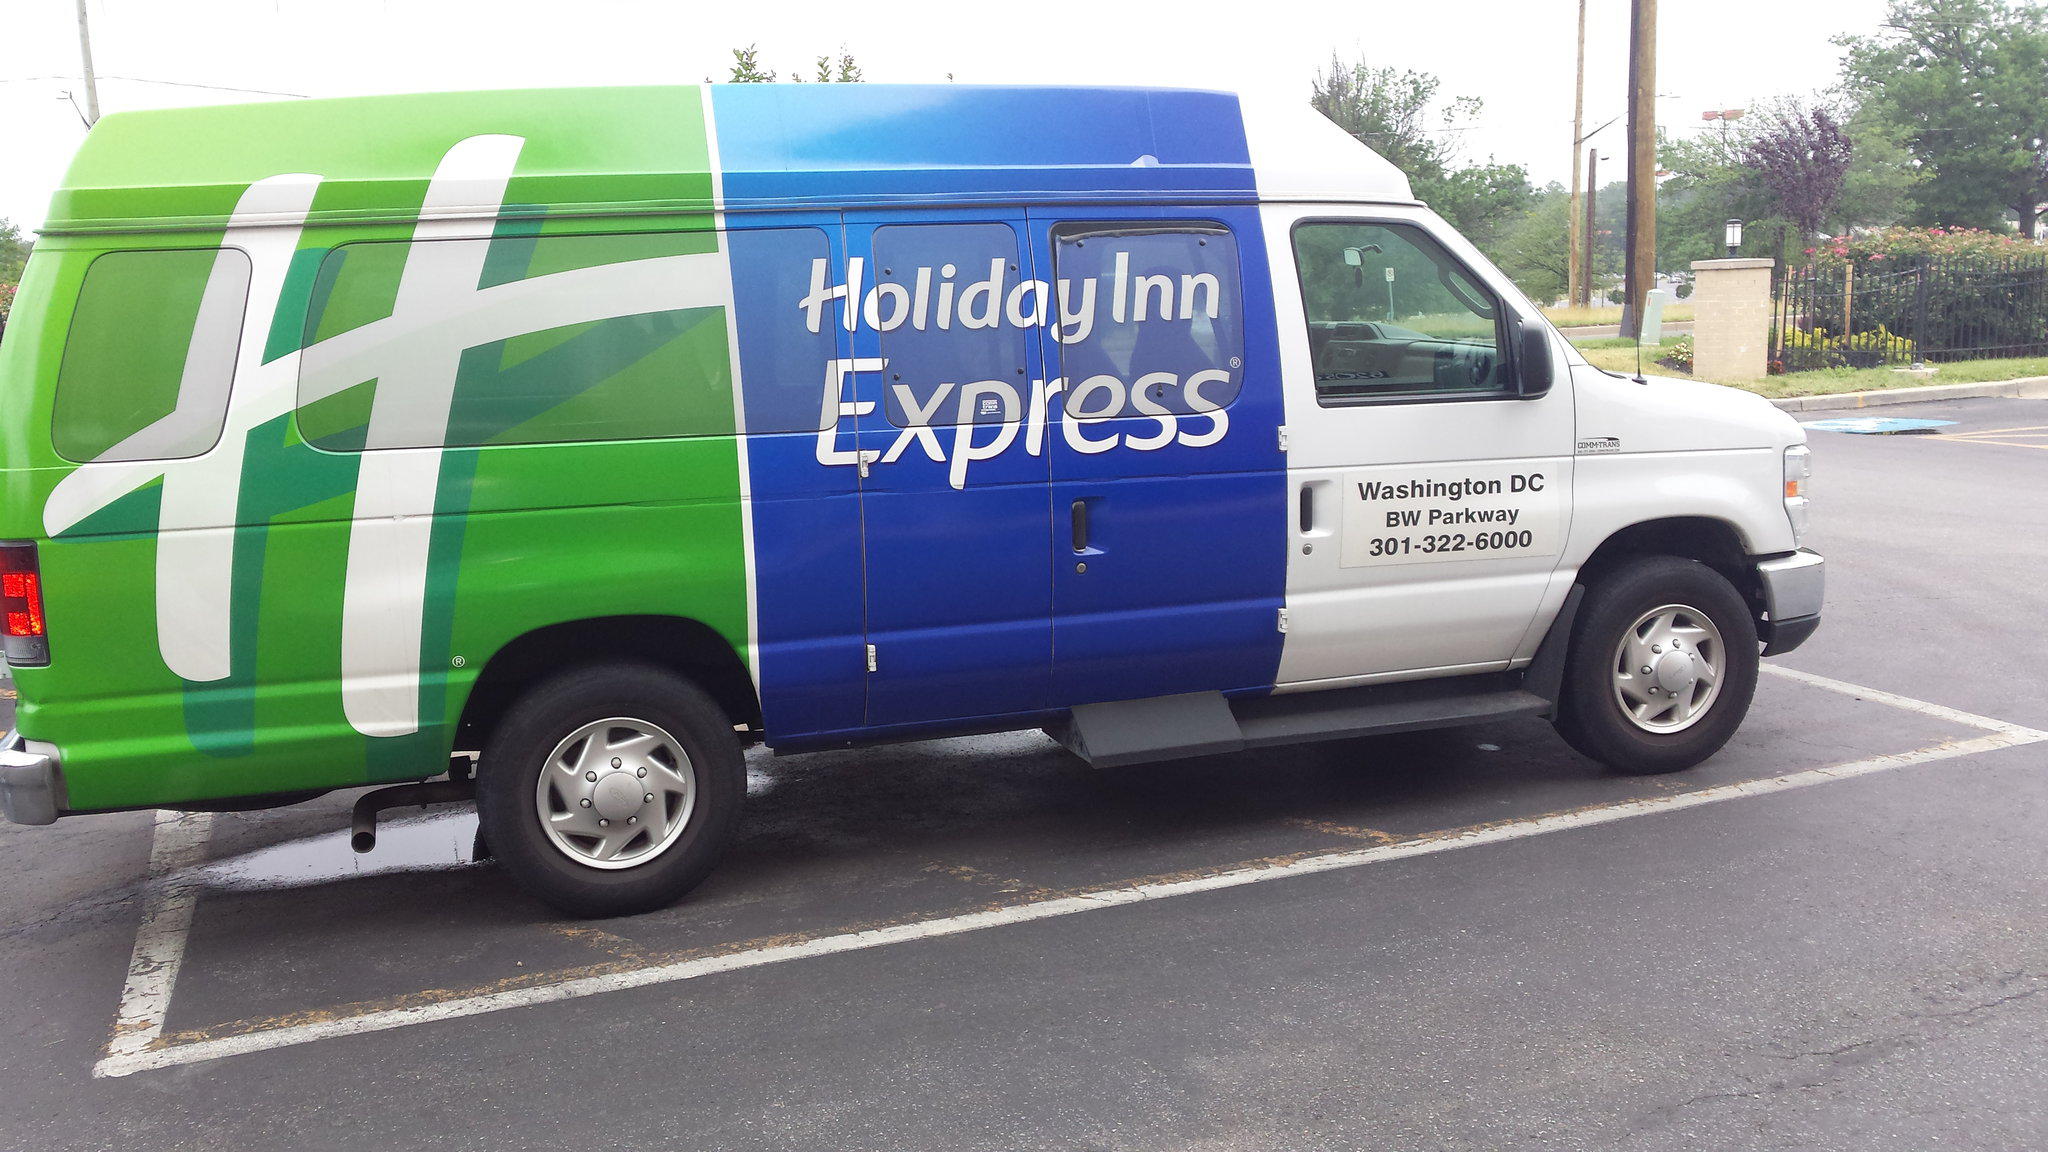 Holiday Inn Express Washington DC - Bw Parkway Photo